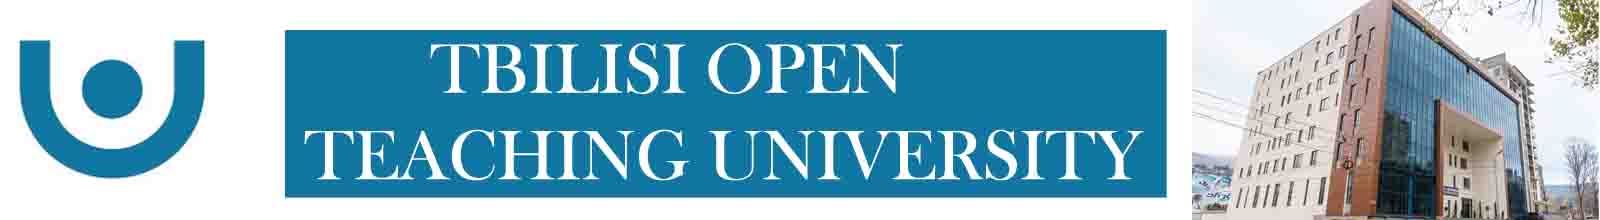 tbilisi open teaching university